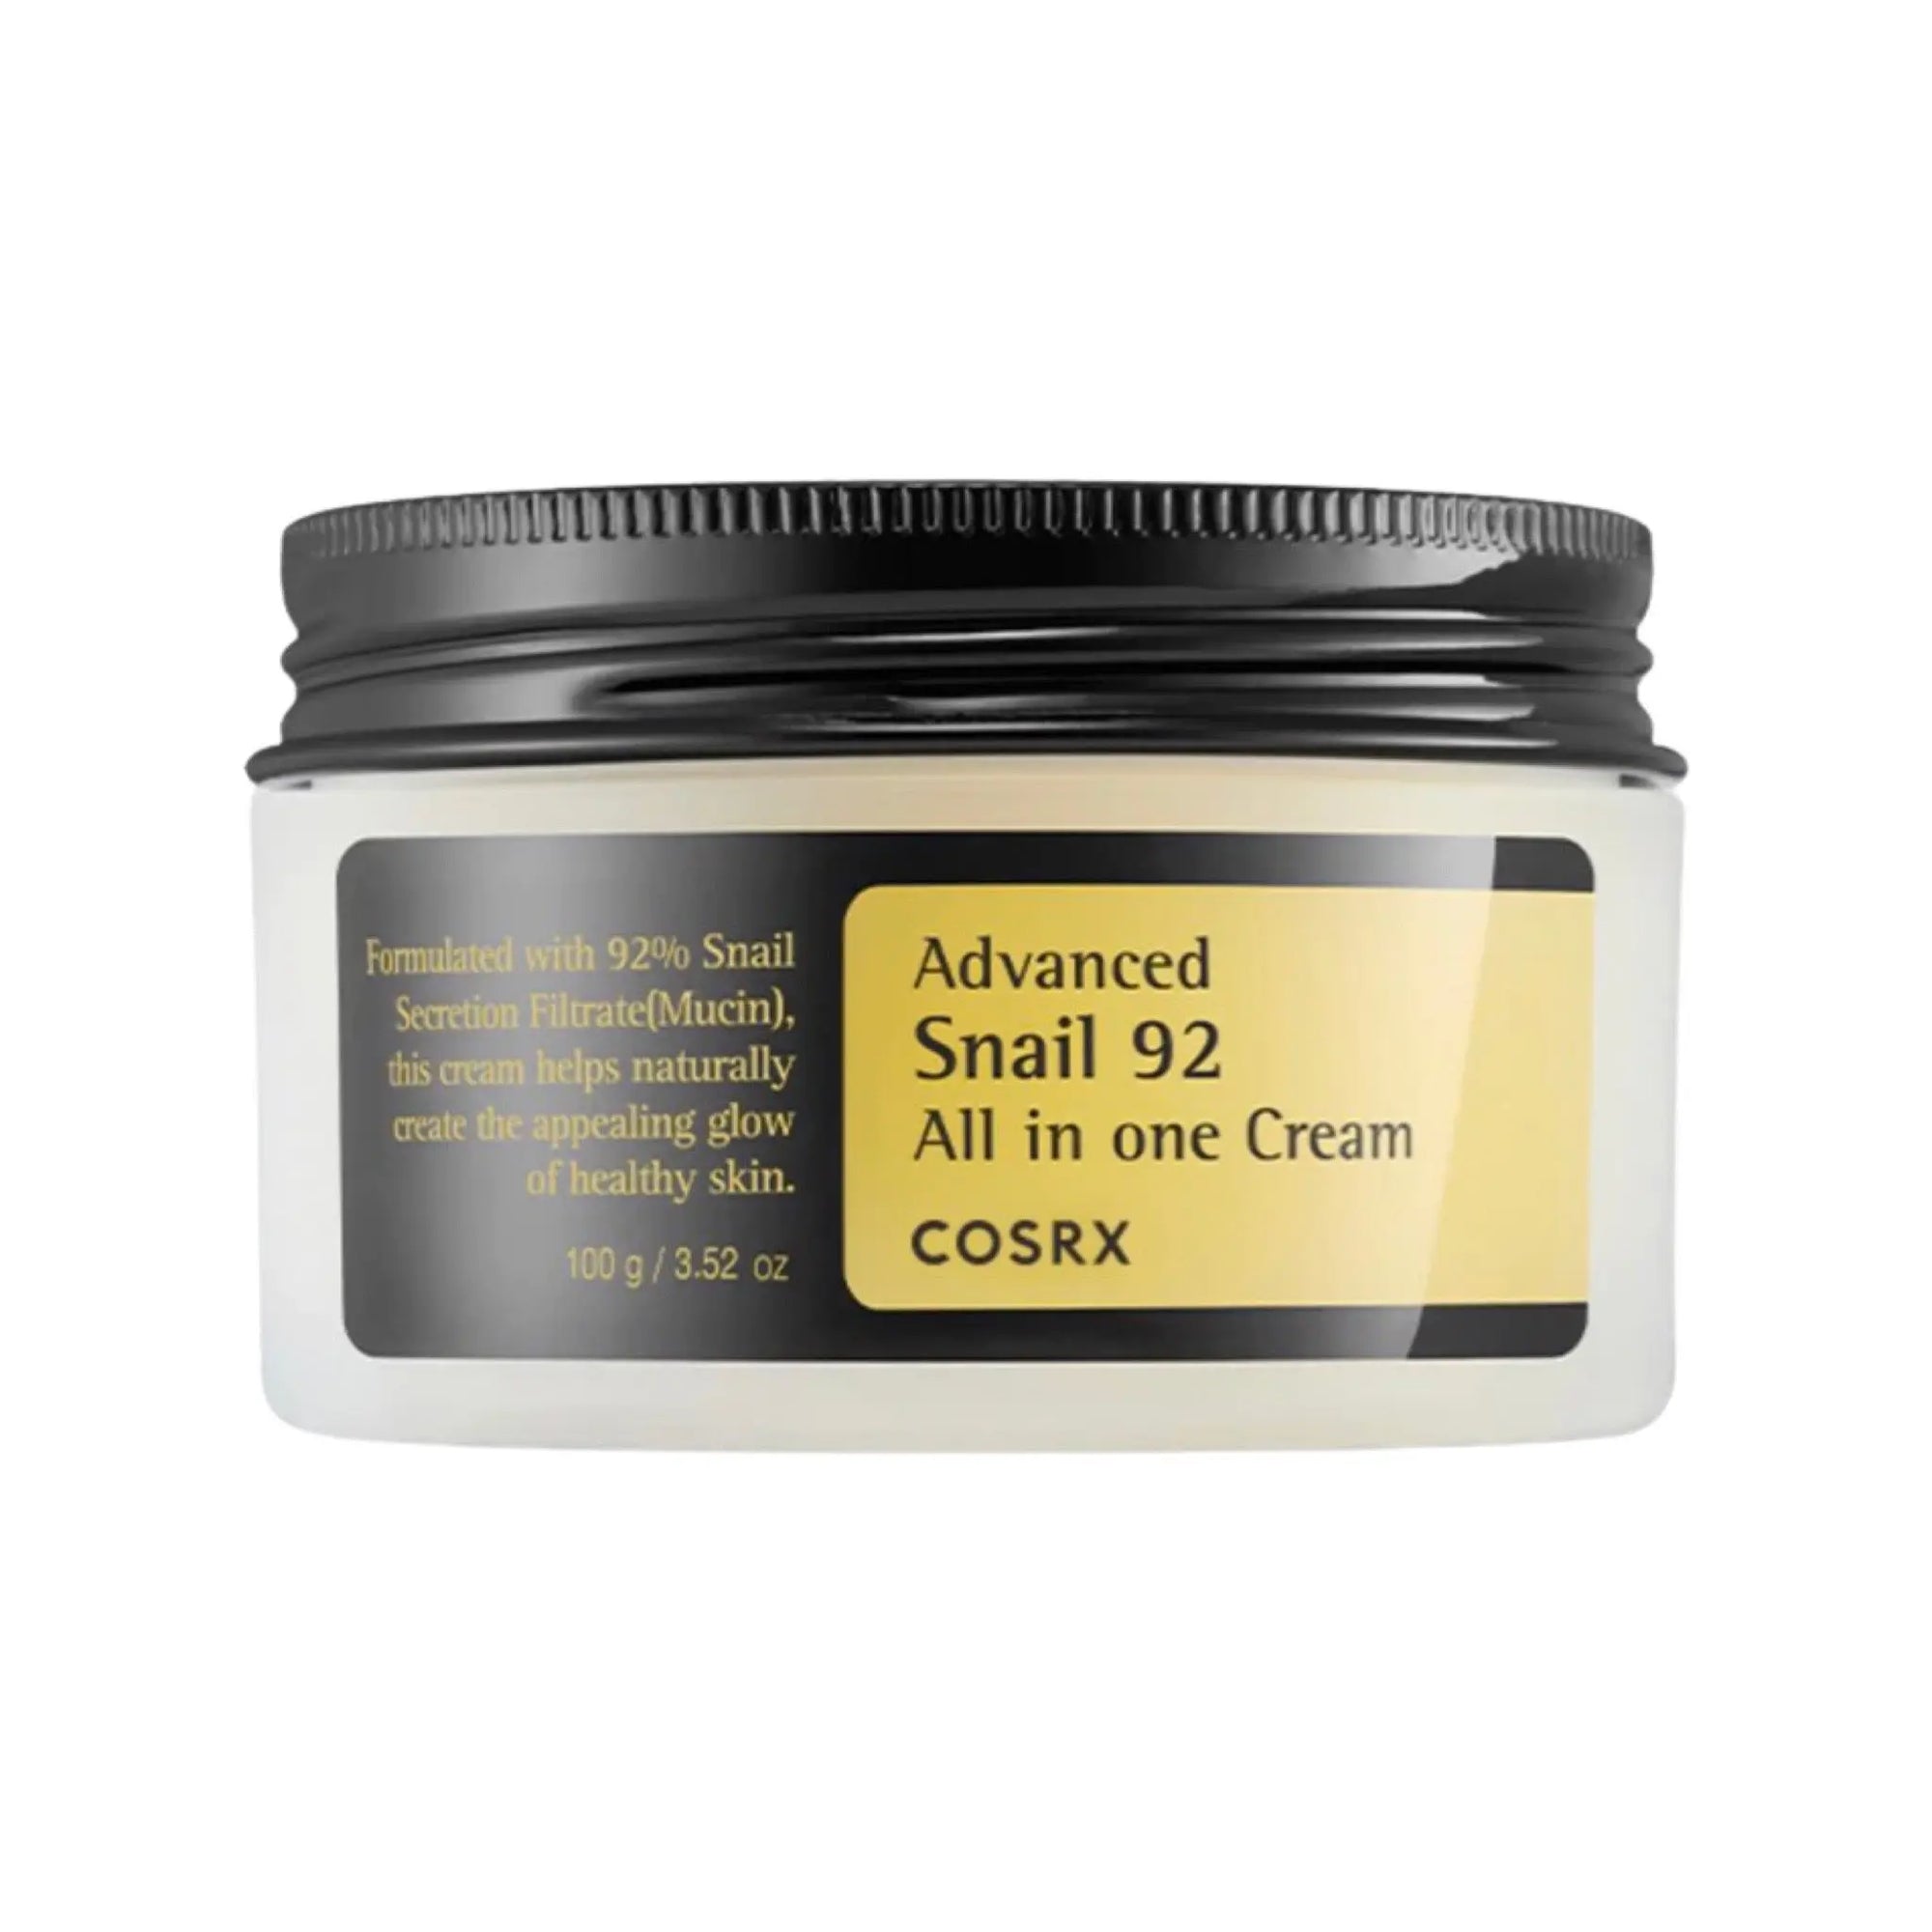 COSRX - Advanced Snail 92 All In One Cream 100g COSRX